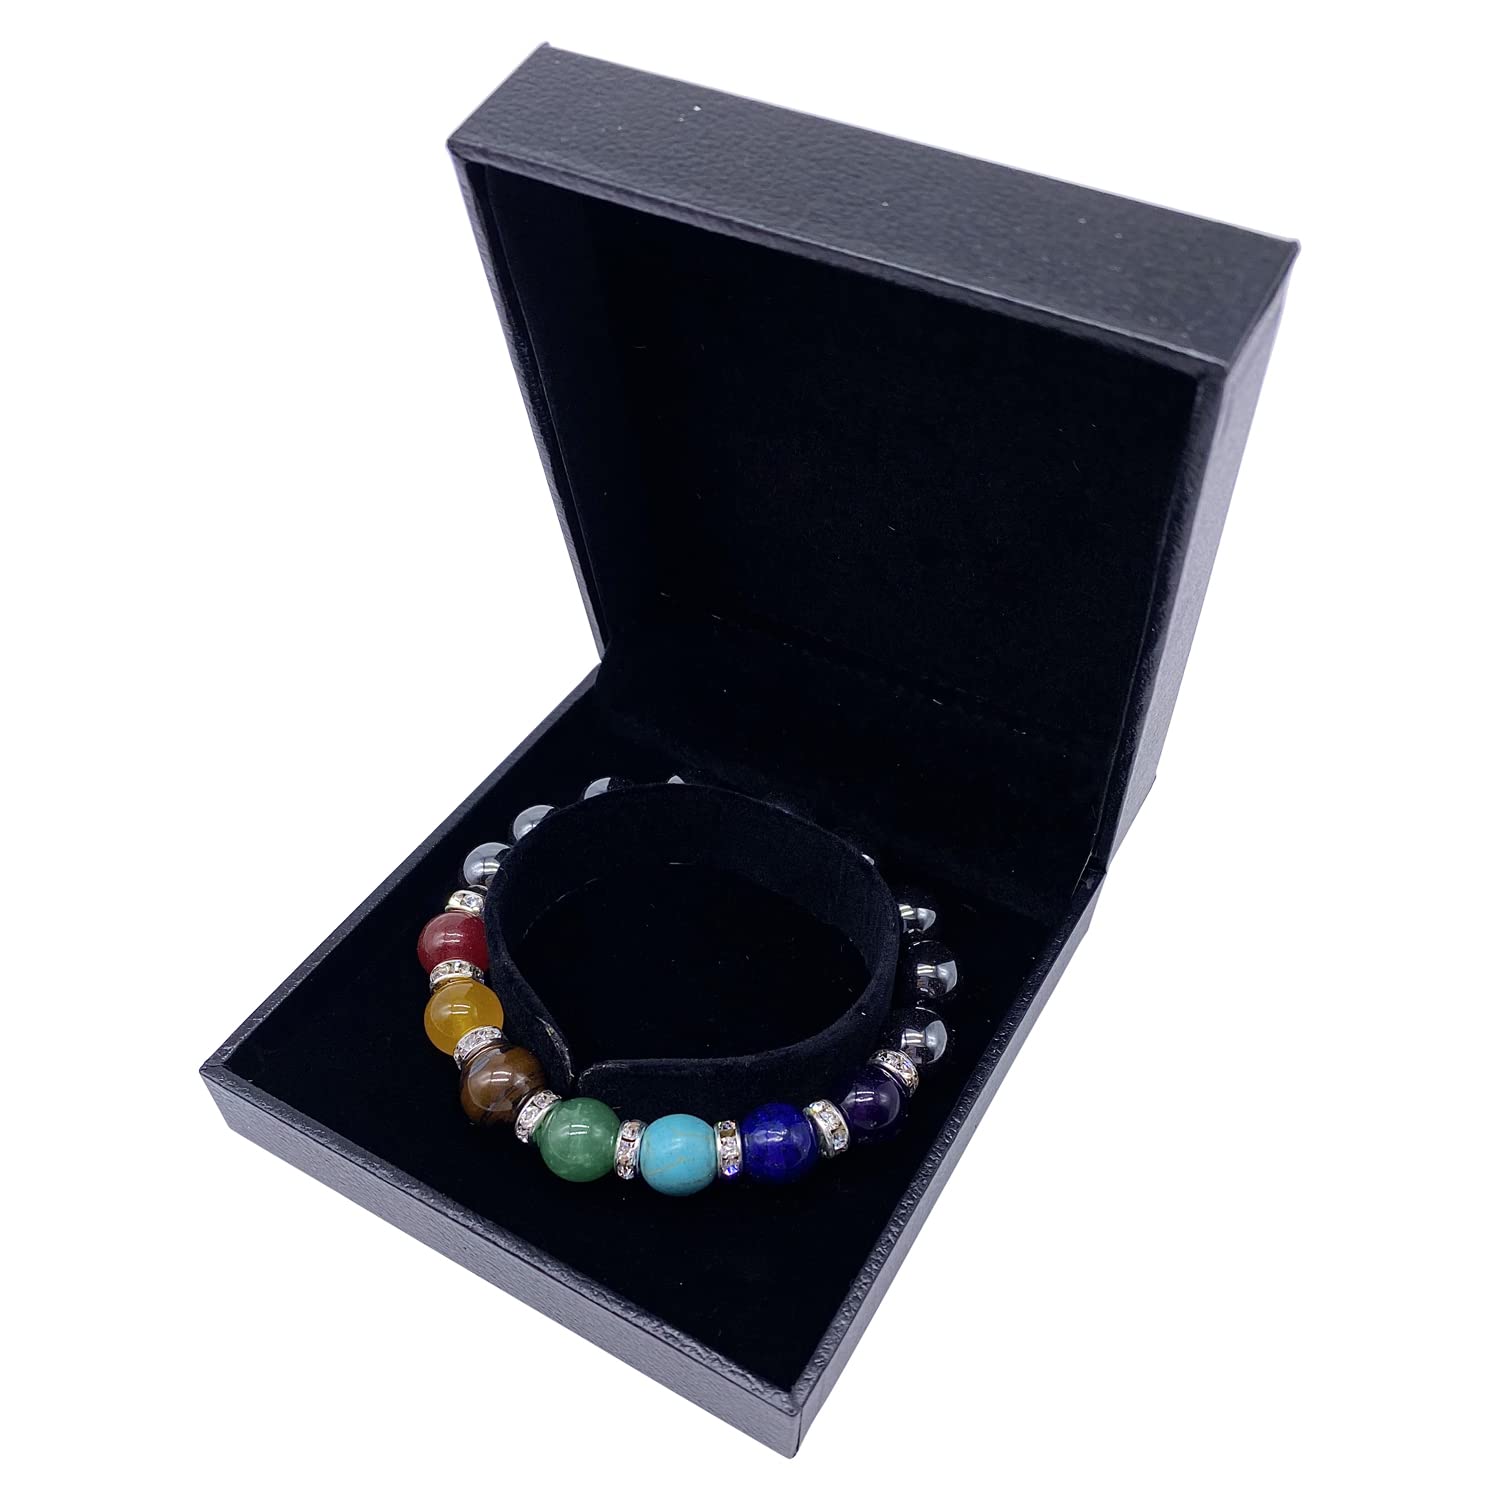 Helena Rose Jewellery - 7 Chakra Gemstone Yoga Stretch Beaded Bracelet for Women &amp; Men - with Hematite Stone Beads - Supplied in A Jewellery Gift Box.